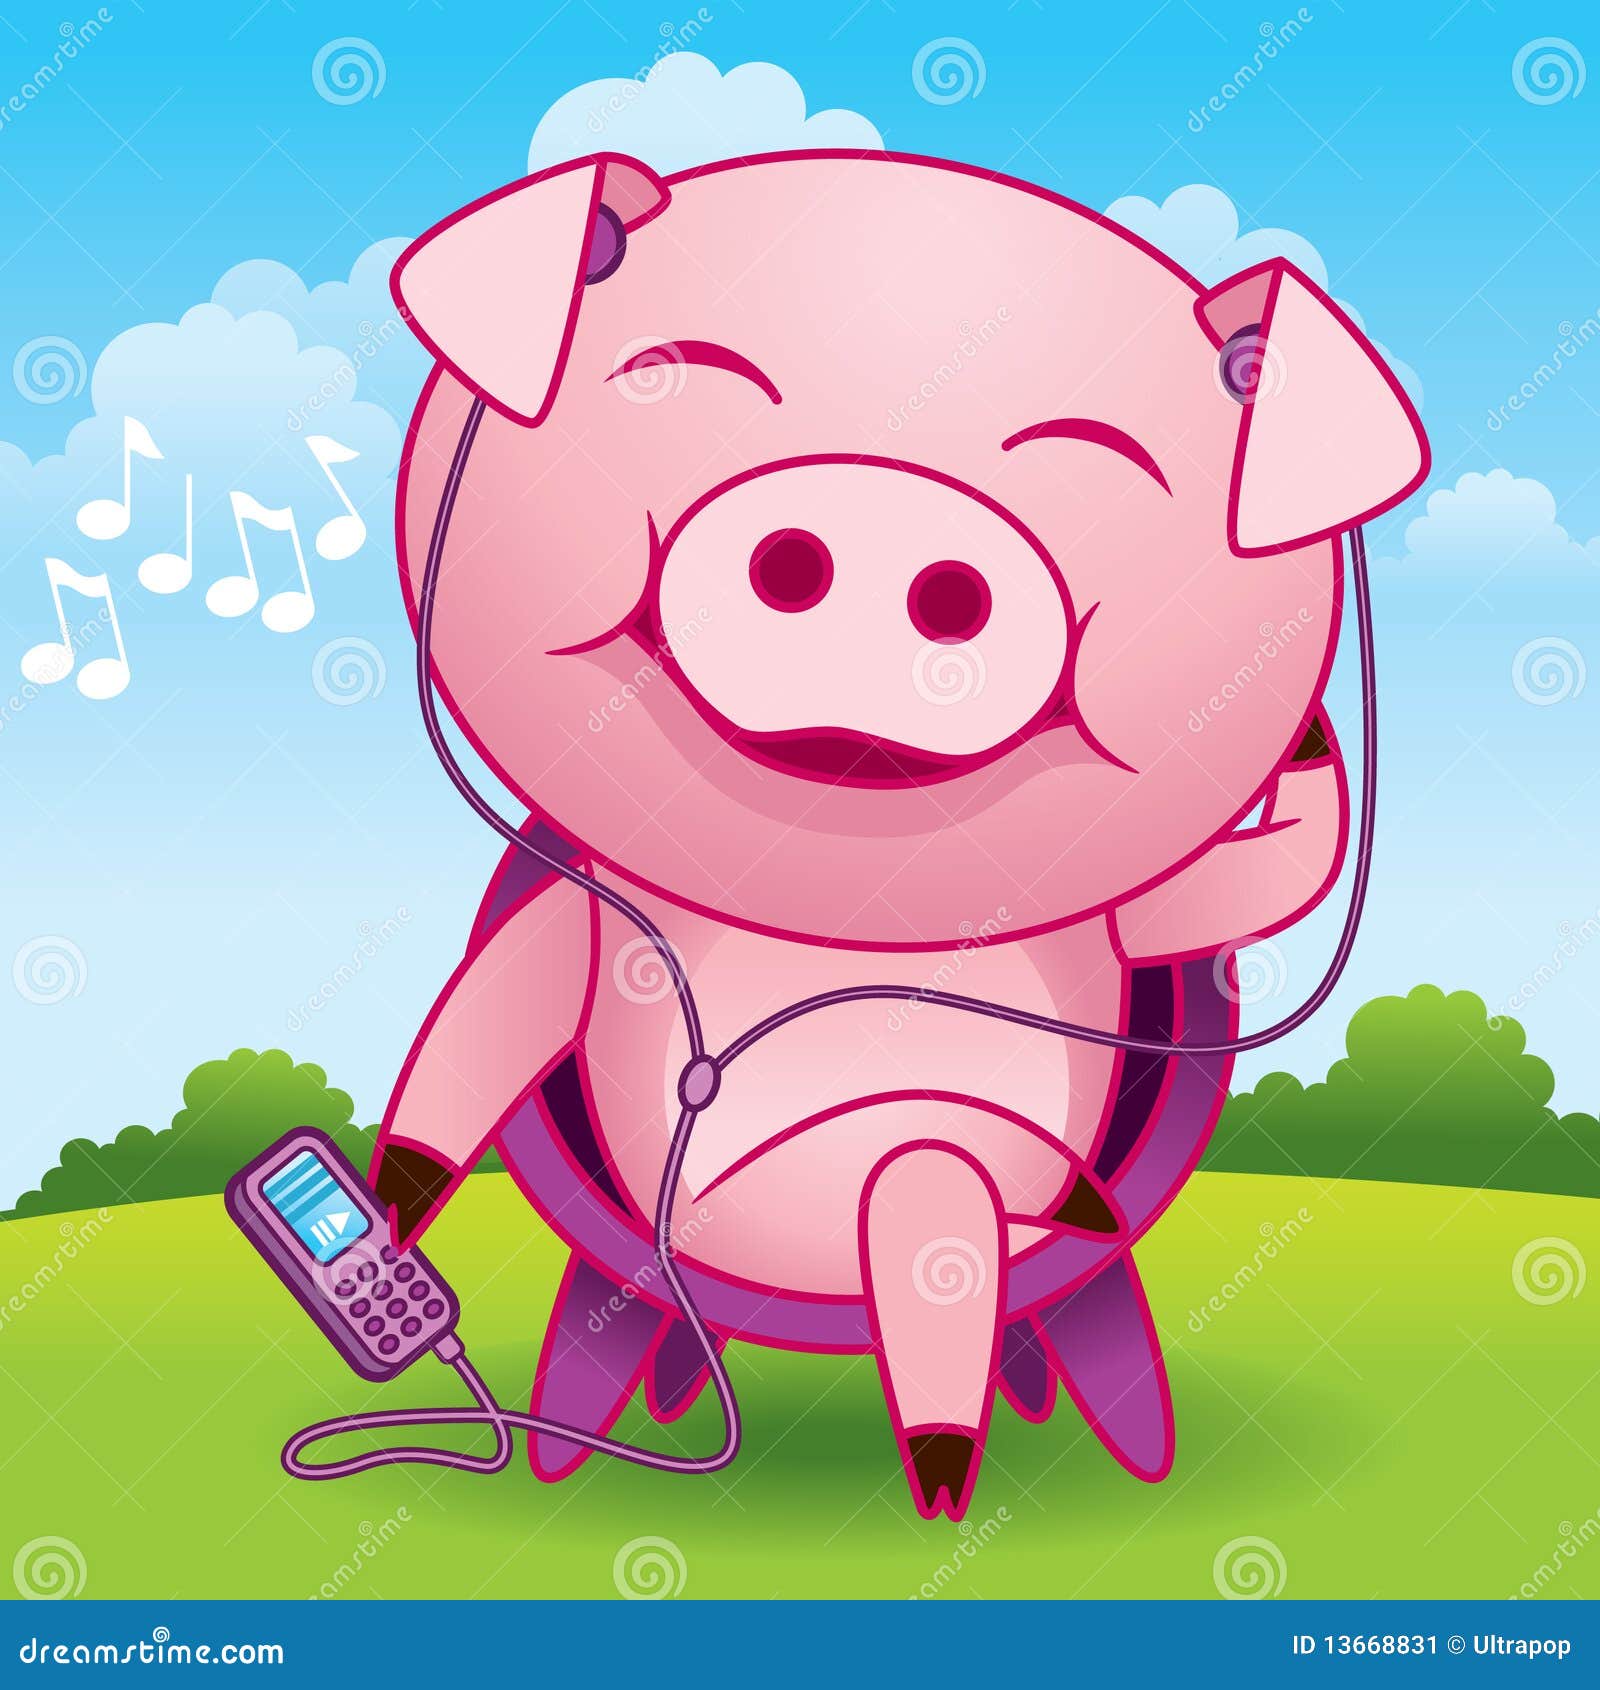 Music Pig Cartoon stock vector. Illustration of adorable - 13668831